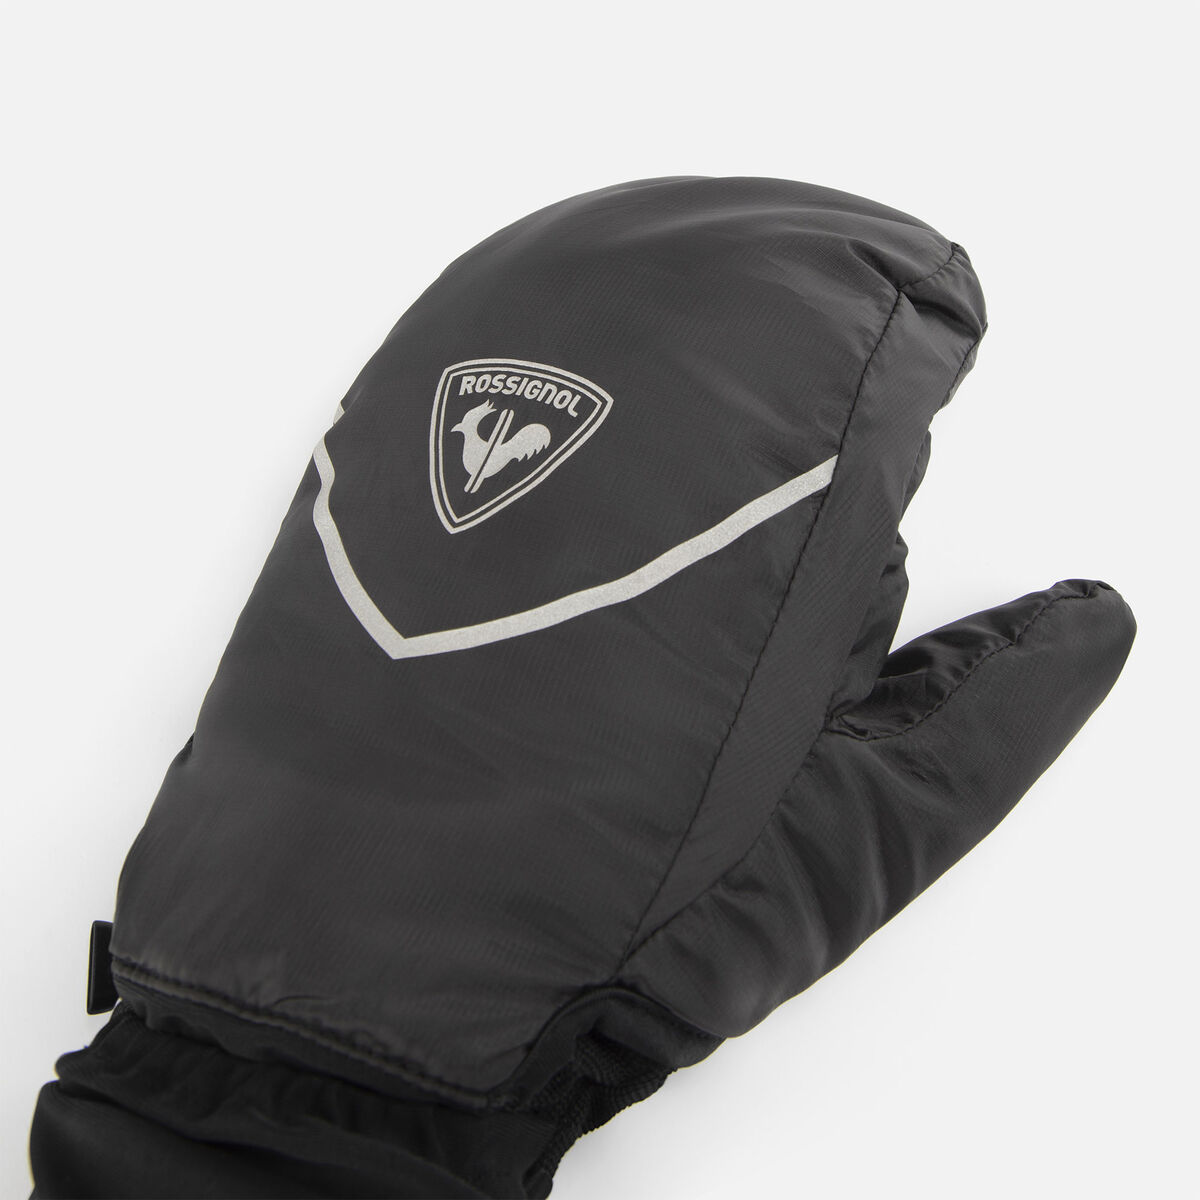 Men's XC Alpha I-Tip Ski Gloves